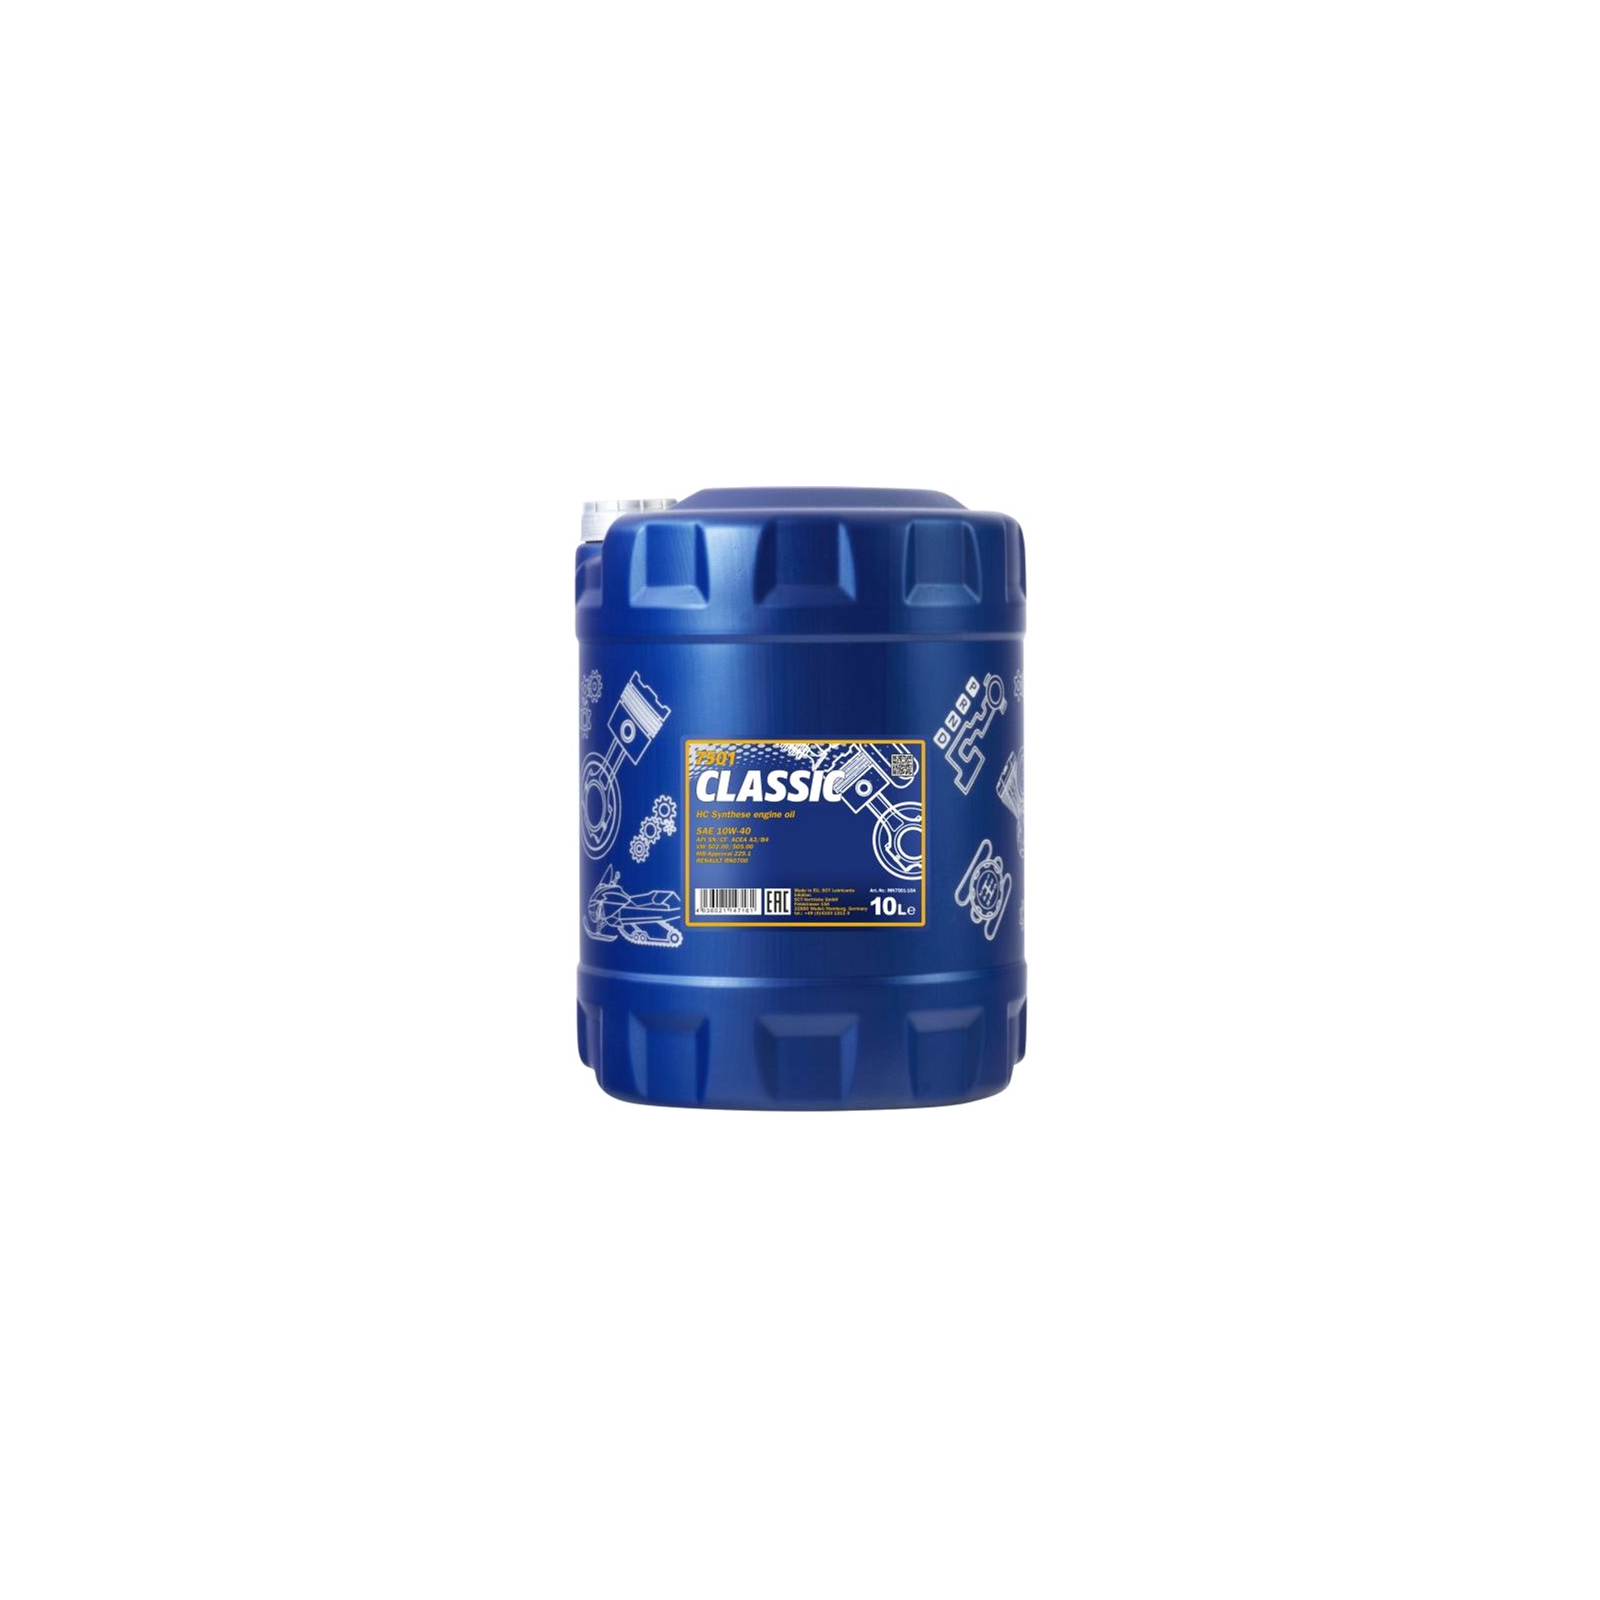 Моторное масло Mannol CLASSIC 10л 10W-40 (MN7501-10)